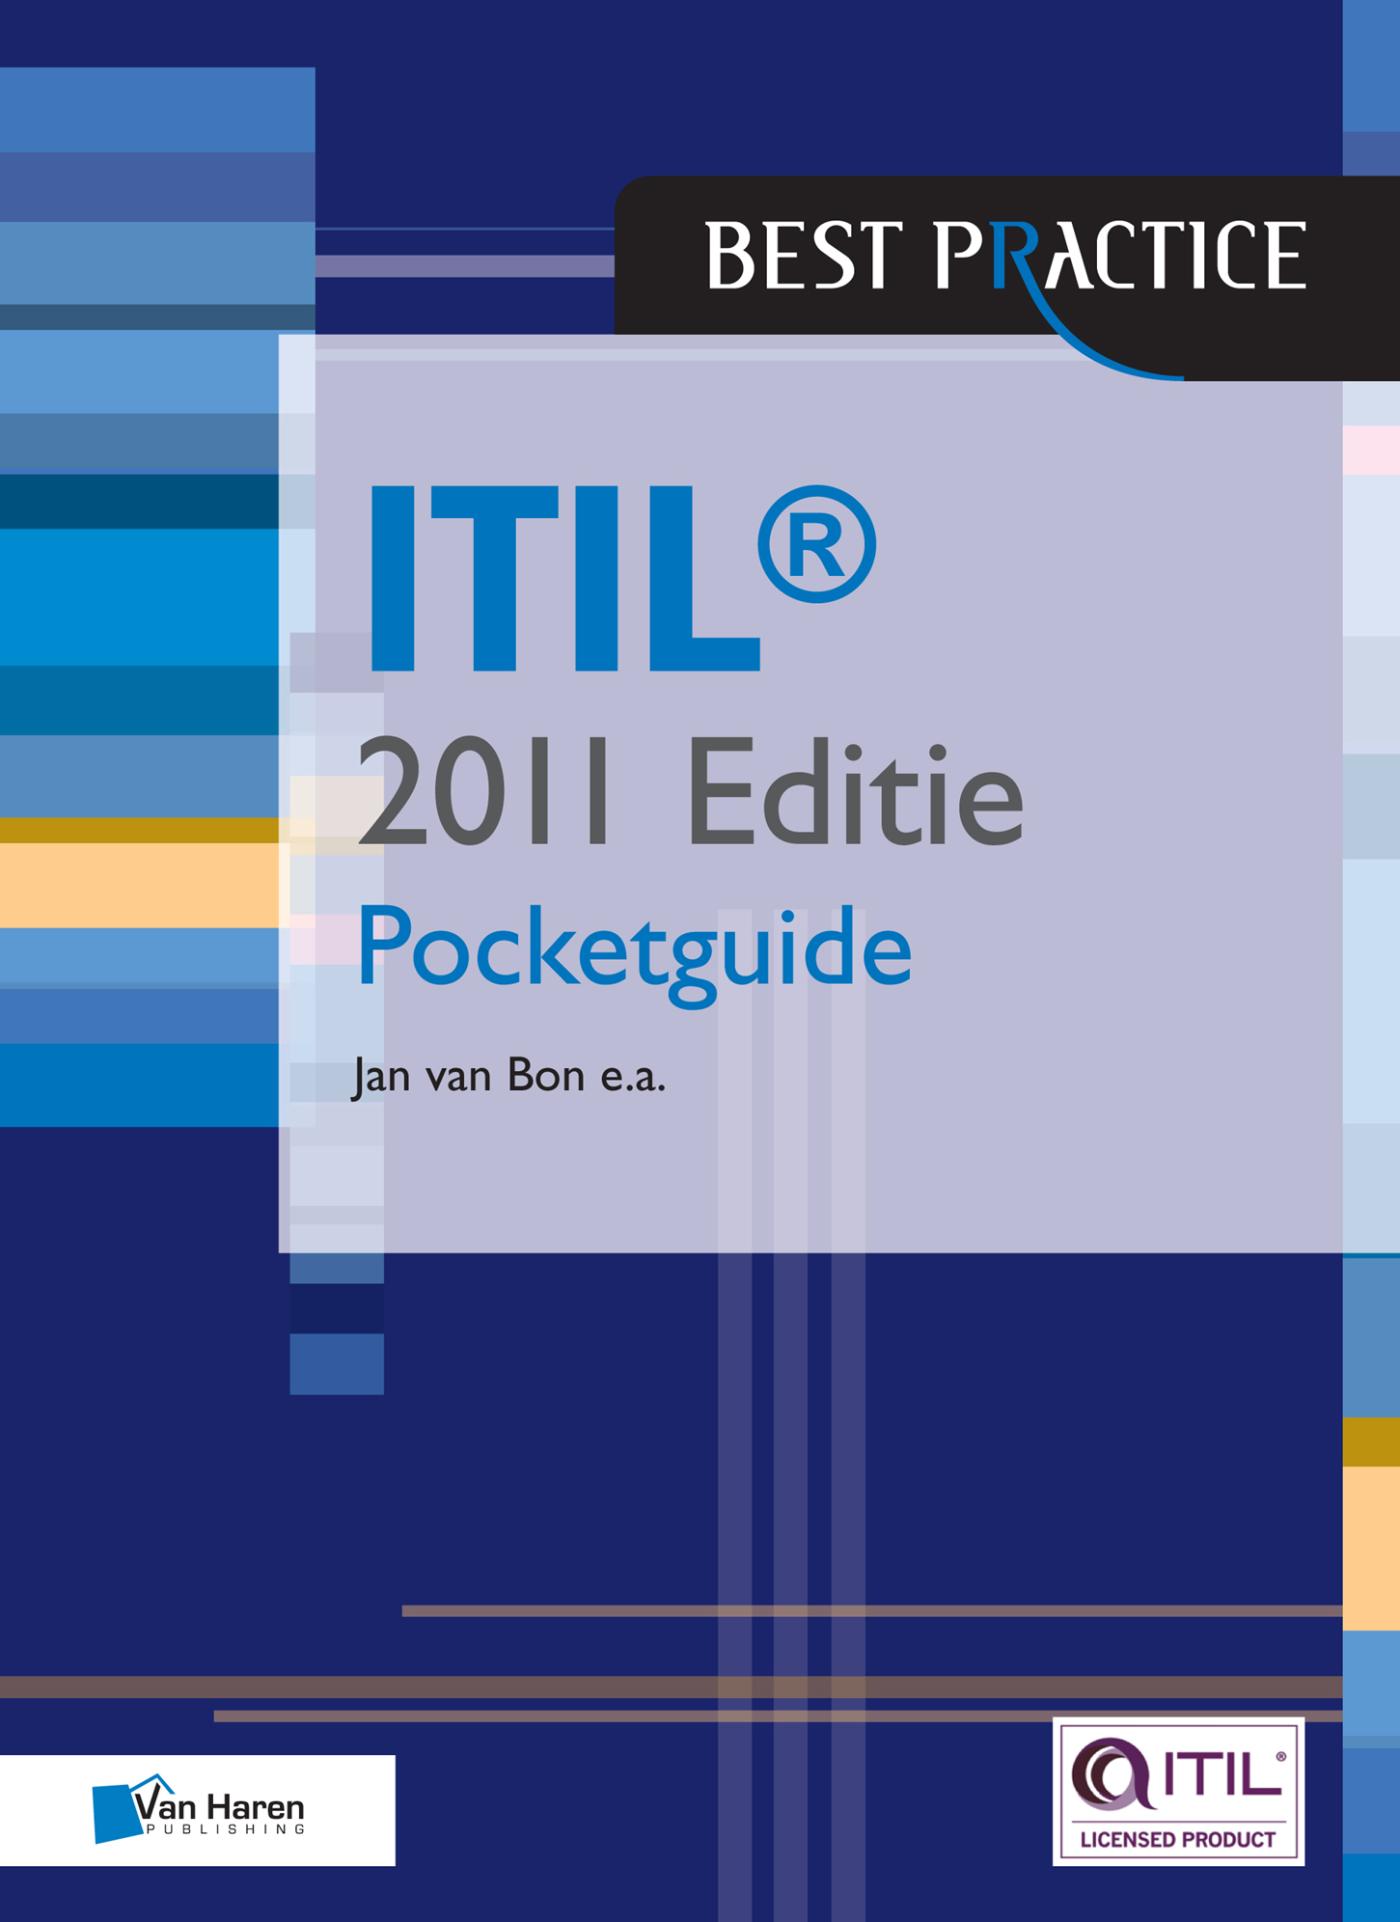 ITIL pocketguide / 2011